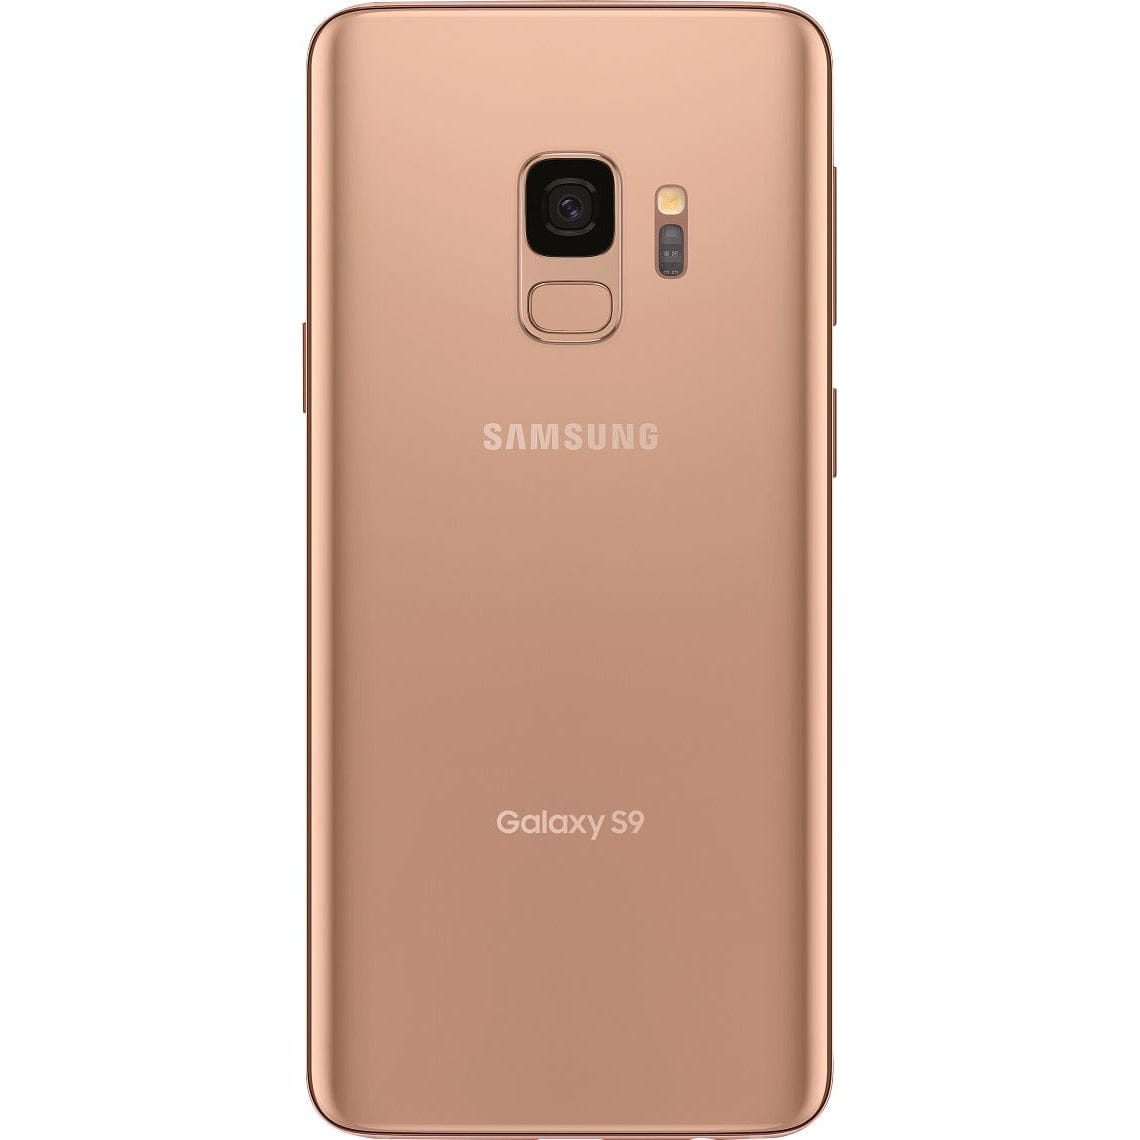 Samsung Galaxy S9 - 64 GB - Sunrise Gold - Unlocked - CDMA-GSM